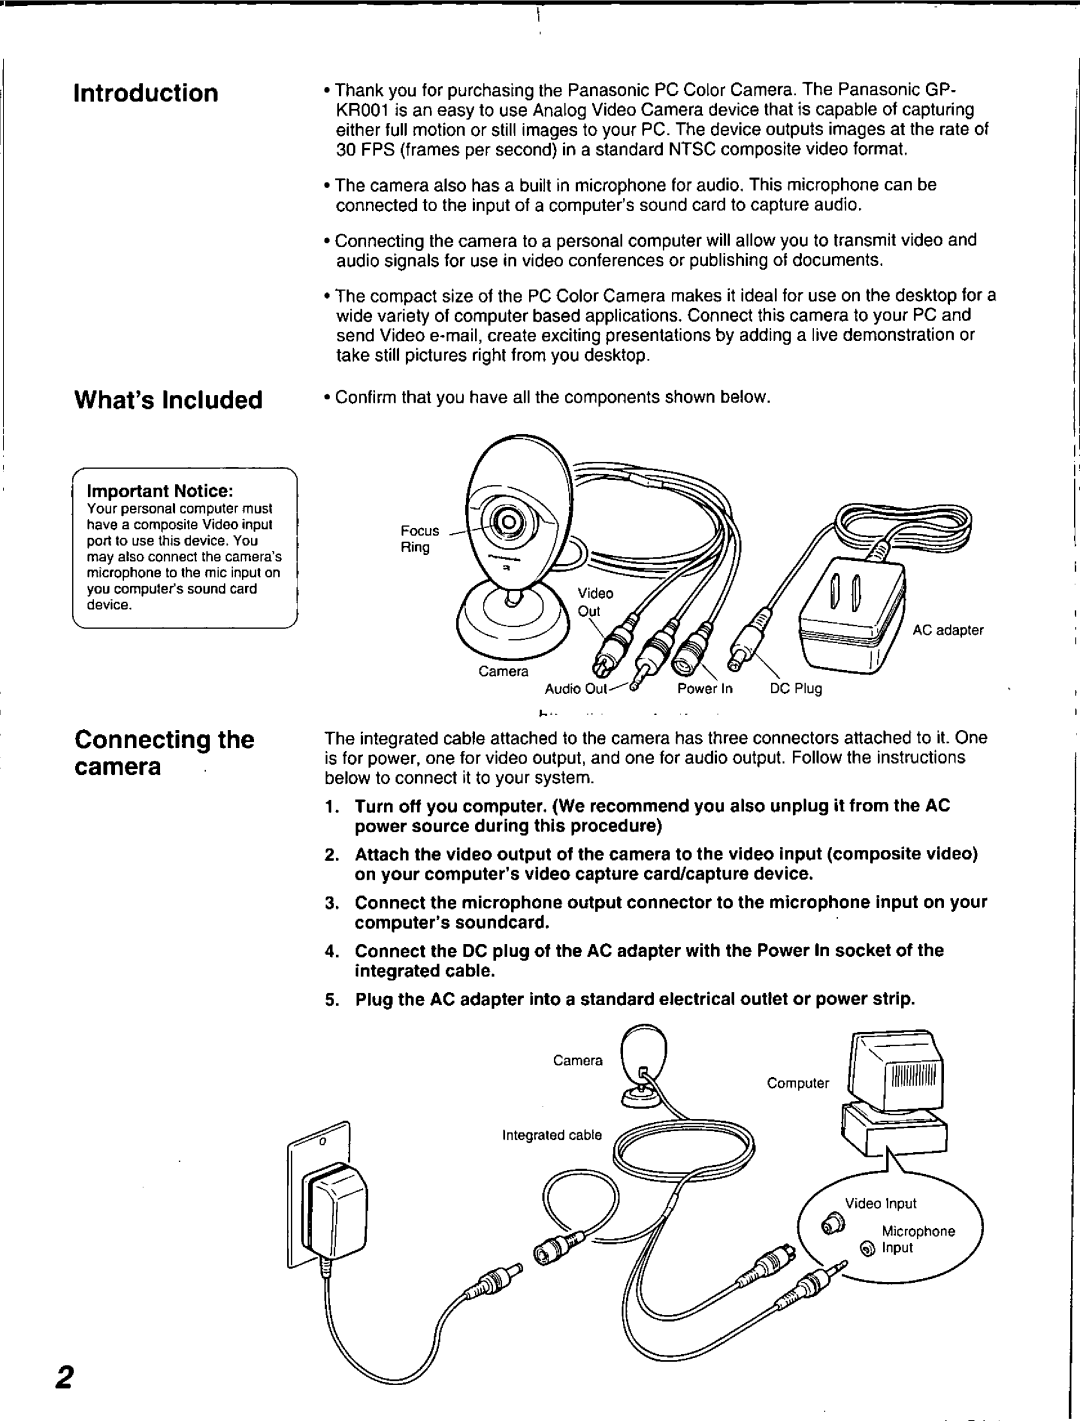 Panasonic GP-KR001 manual 